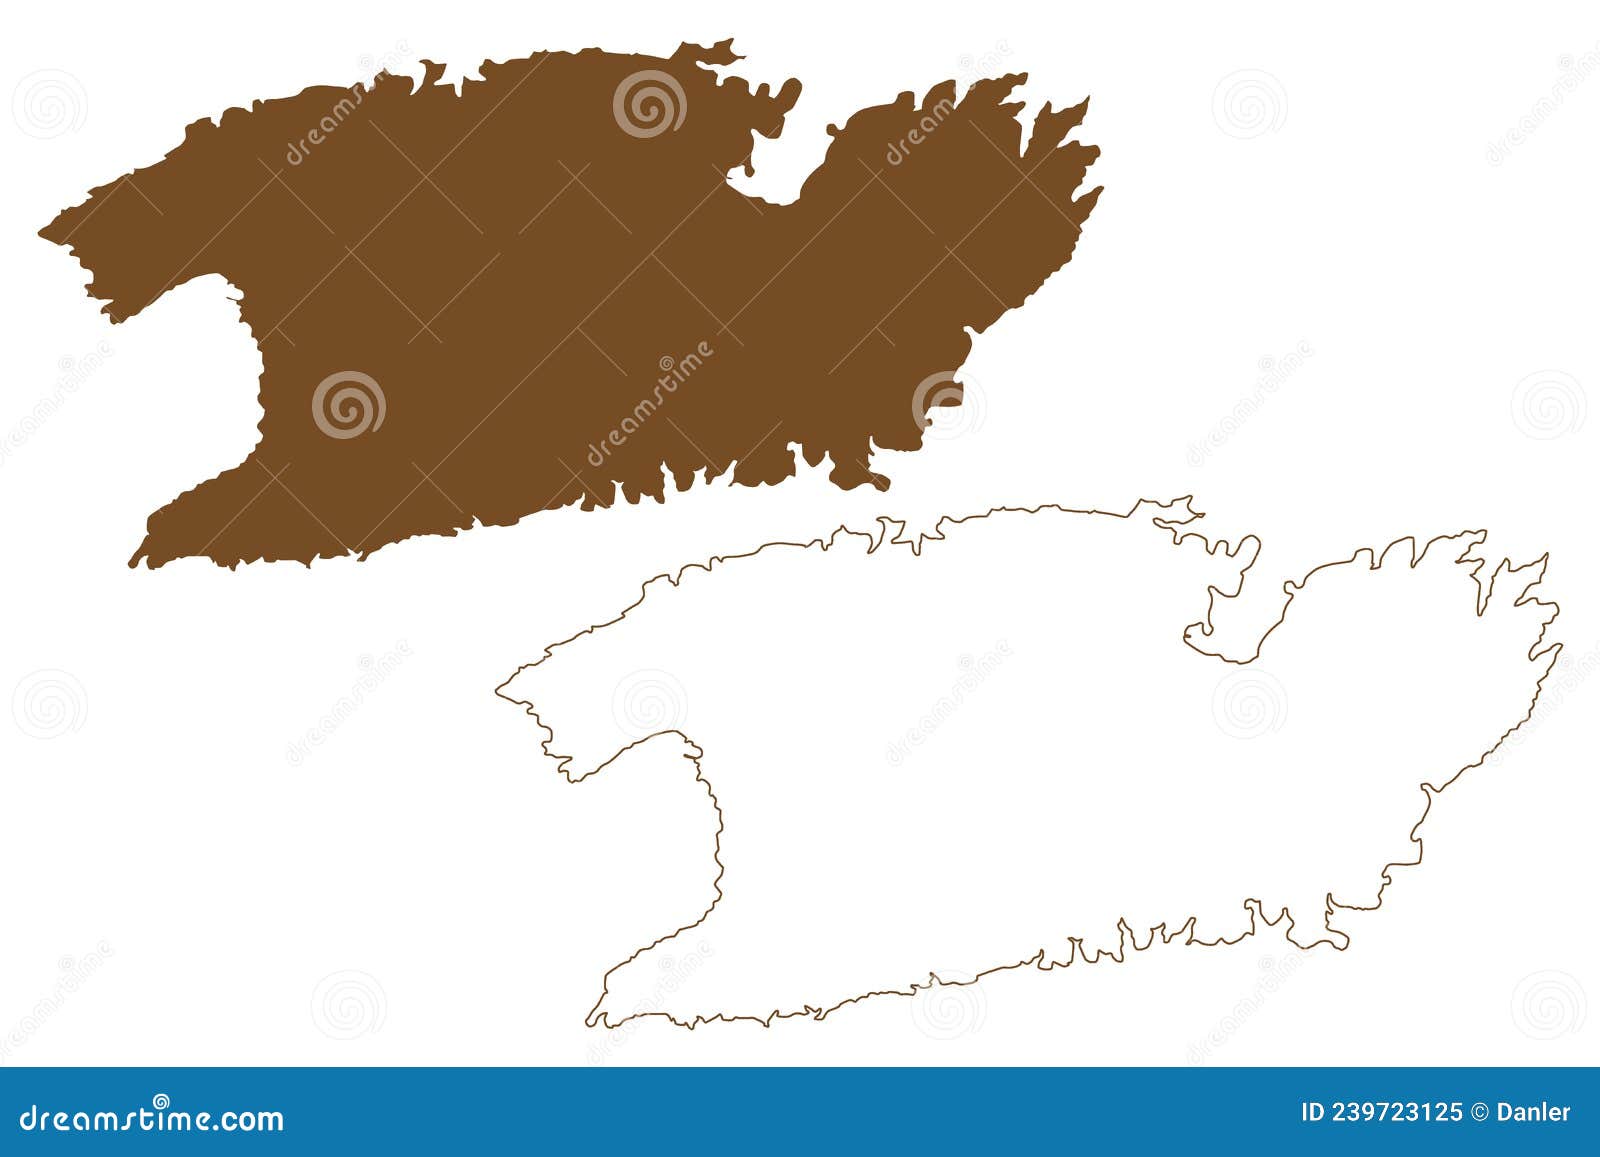 vis island republic of croatia, dalmatian archipielago, adriatic sea map  , scribble sketch vis map